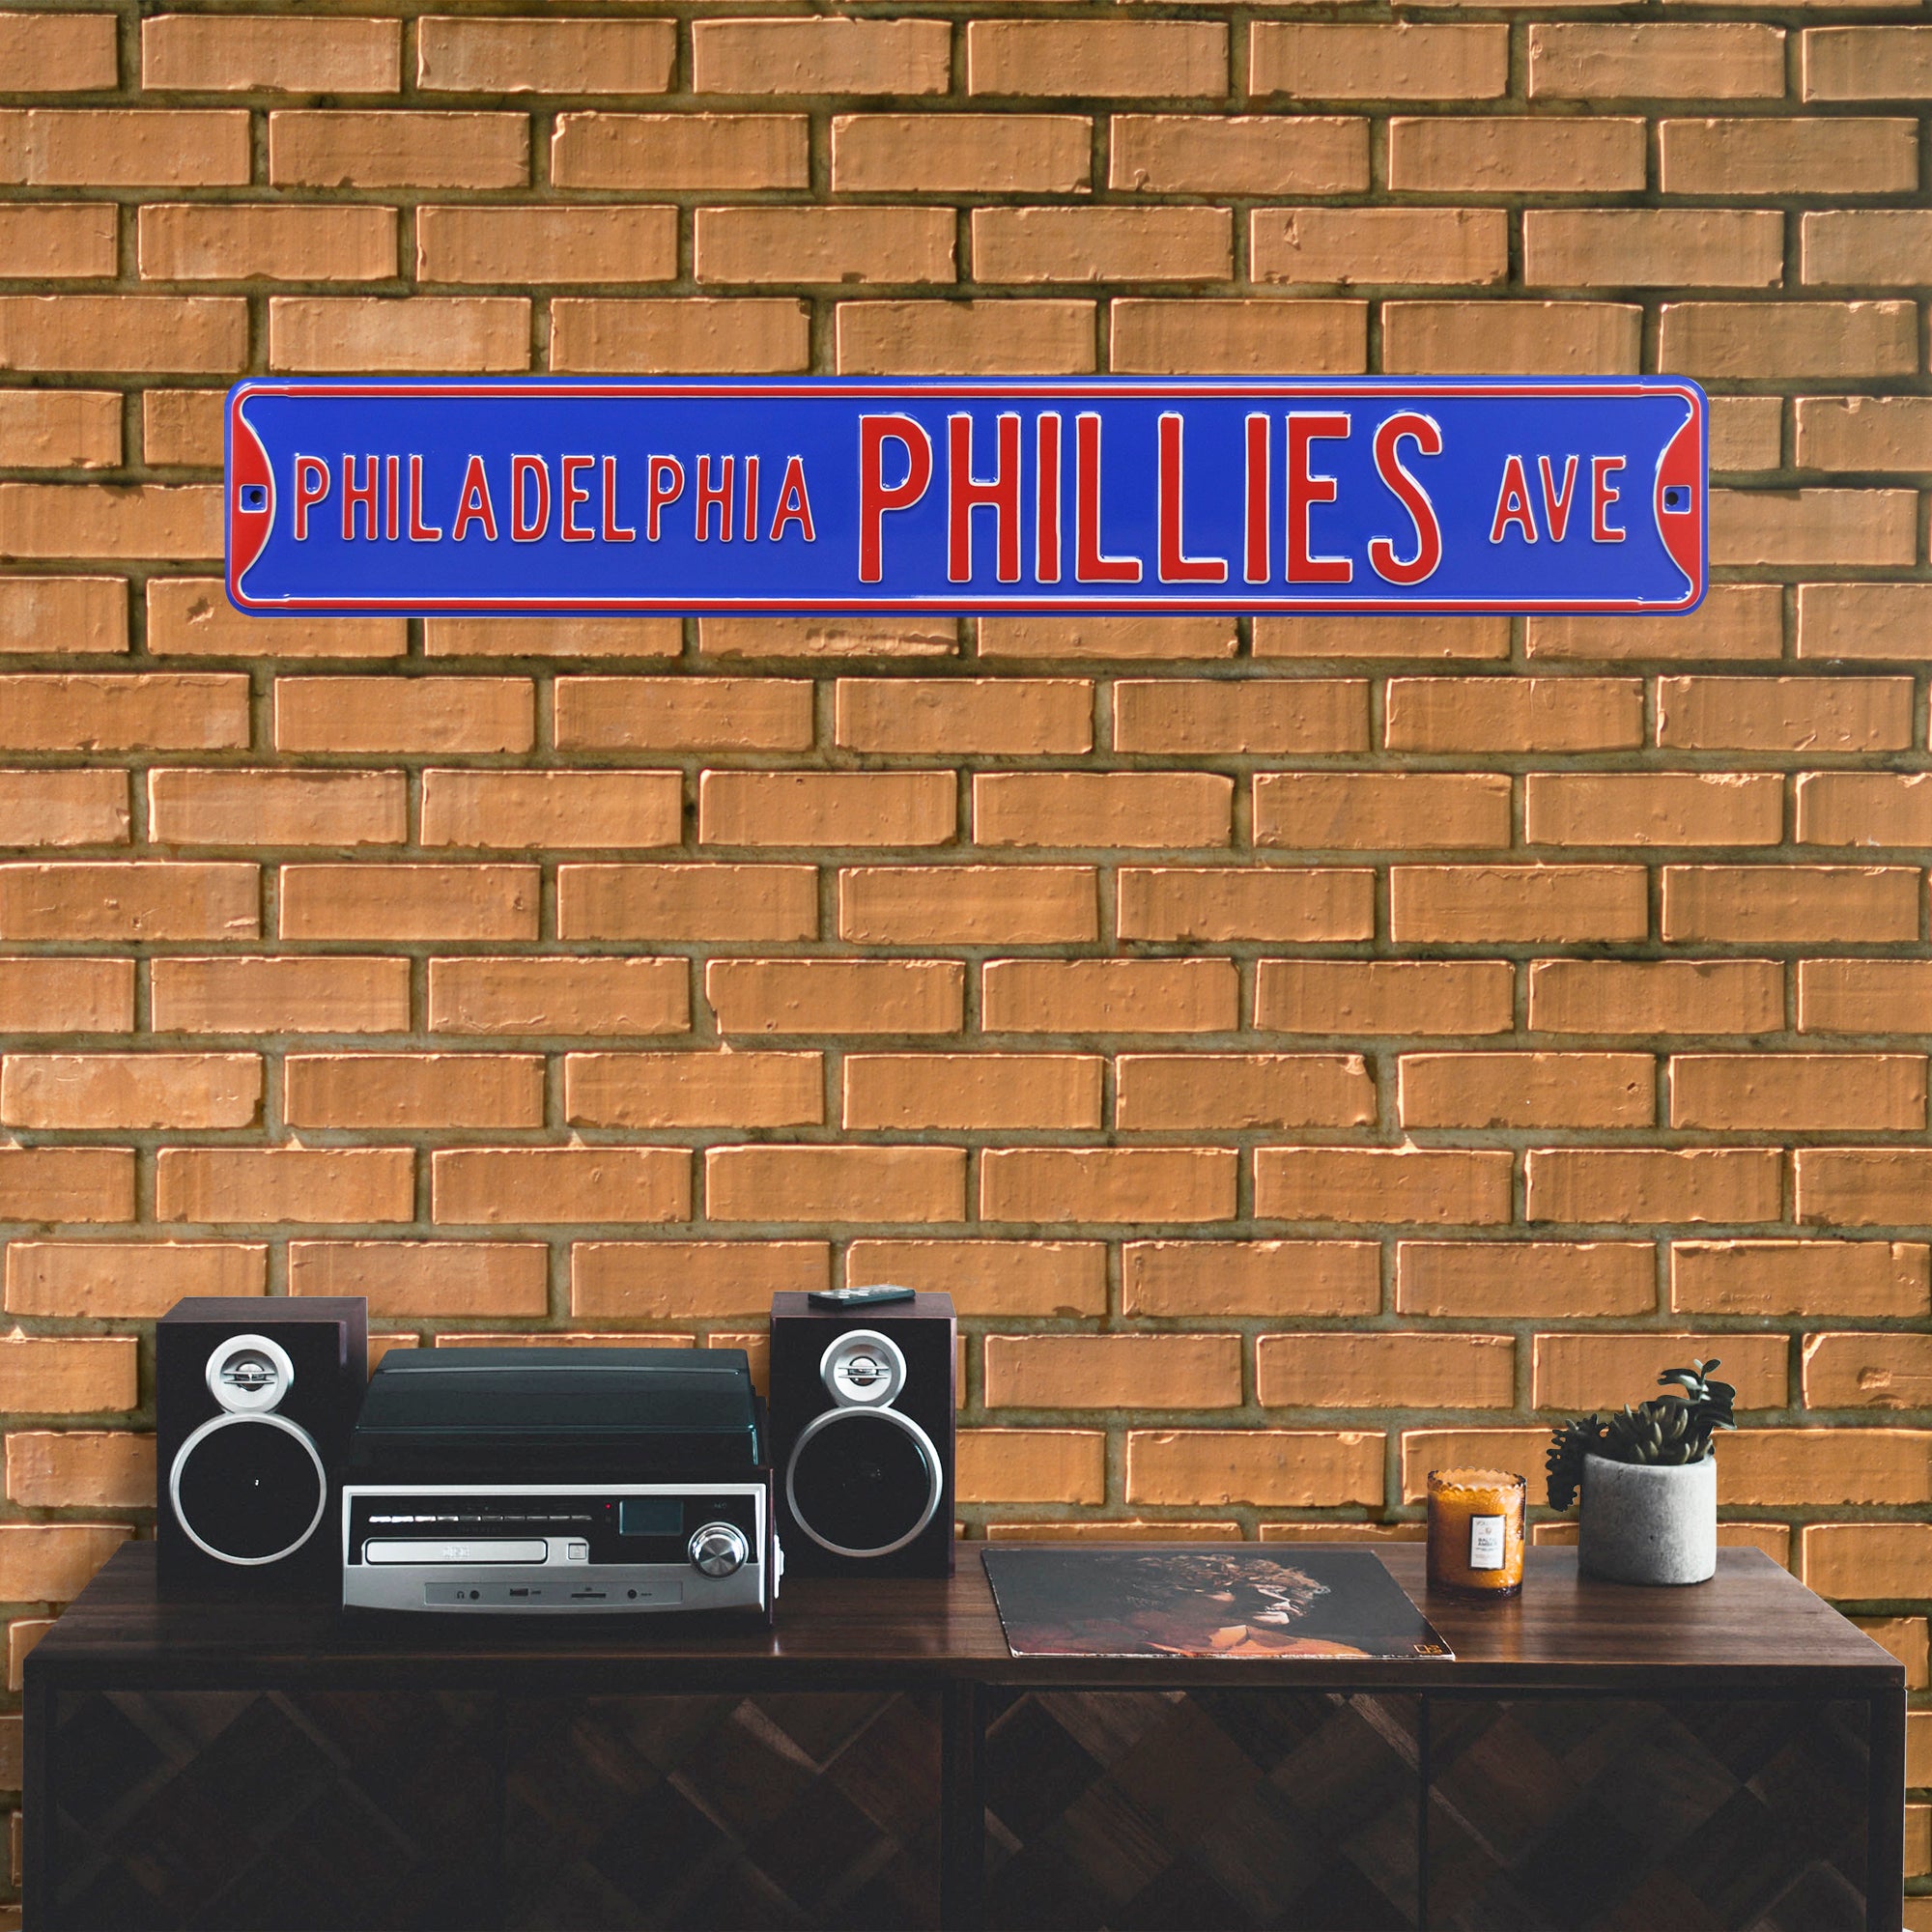 Philadelphia Phillies Steel Street Sign-PHILADELPHIA PHILLIES AVE Blue 36" W x 6" H by Fathead